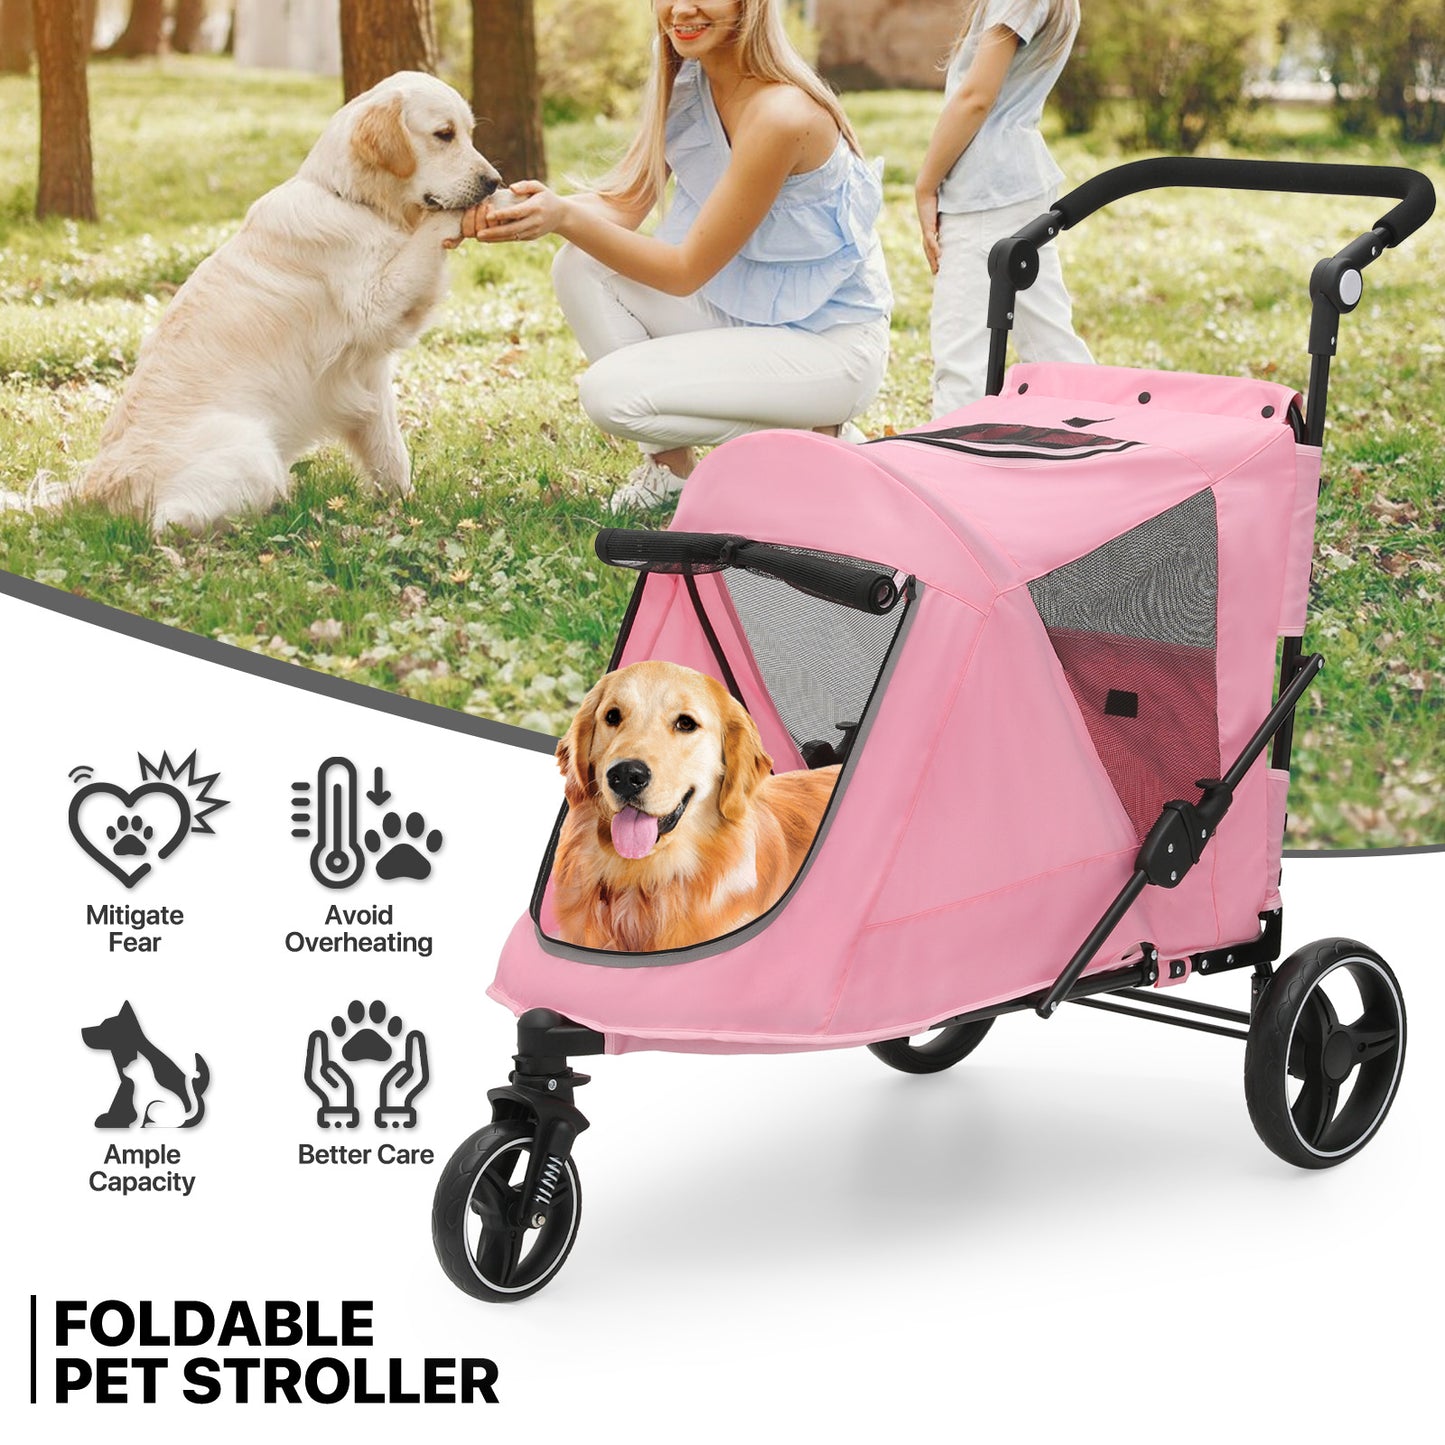 3 Wheels Pet Stroller - 41*23*39.5 inch - Angle Adjustable Handlebar